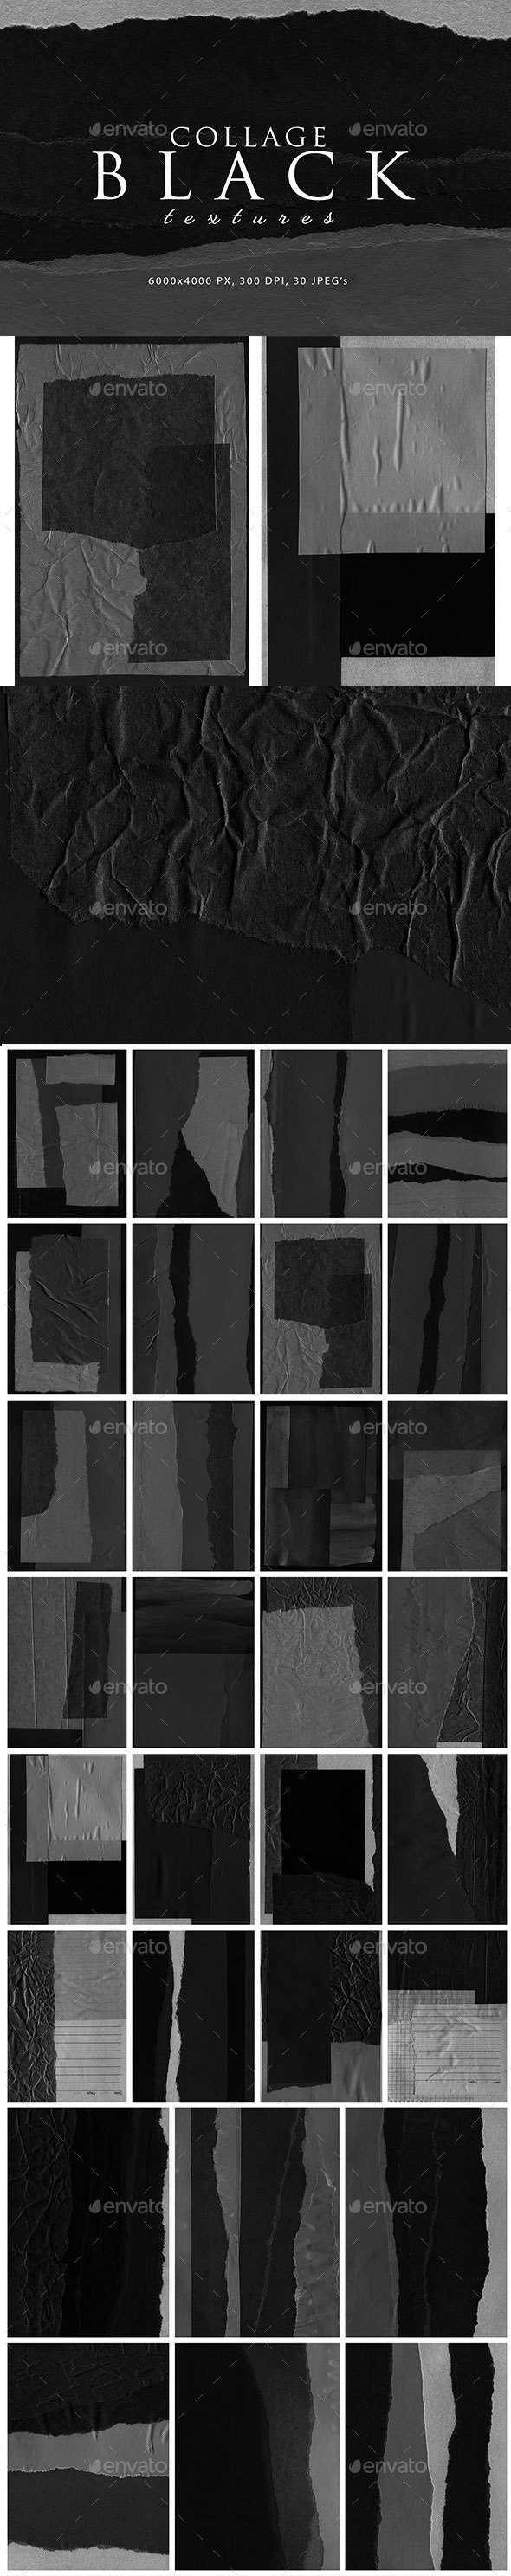 [DOWNLOAD]Black Paper Collage Textures